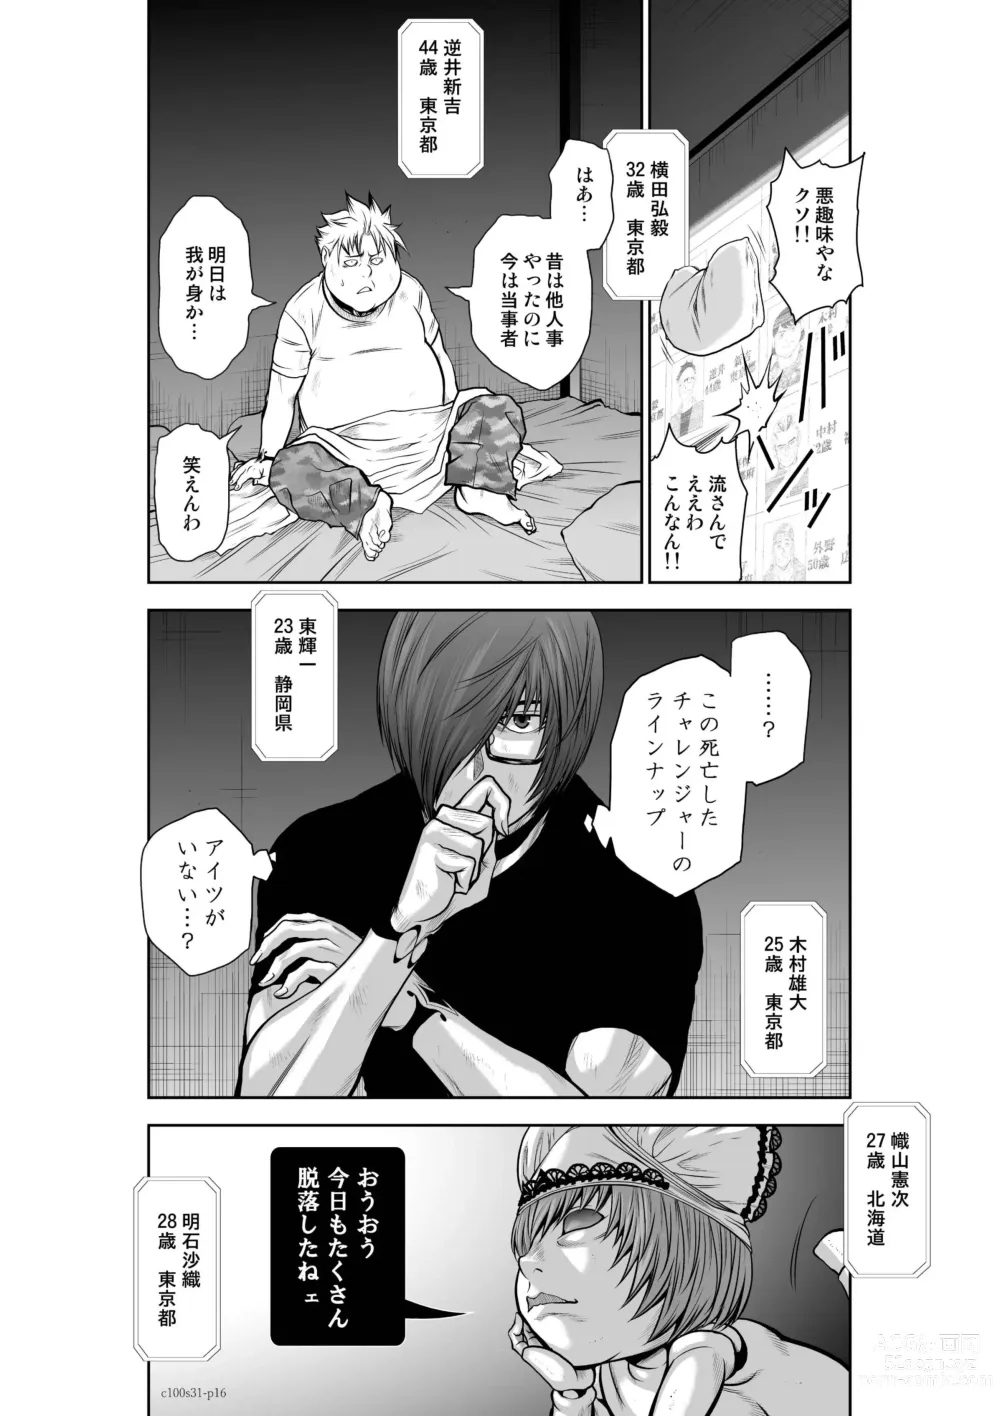 Page 16 of manga Chijou Hyakkai Ch31-60